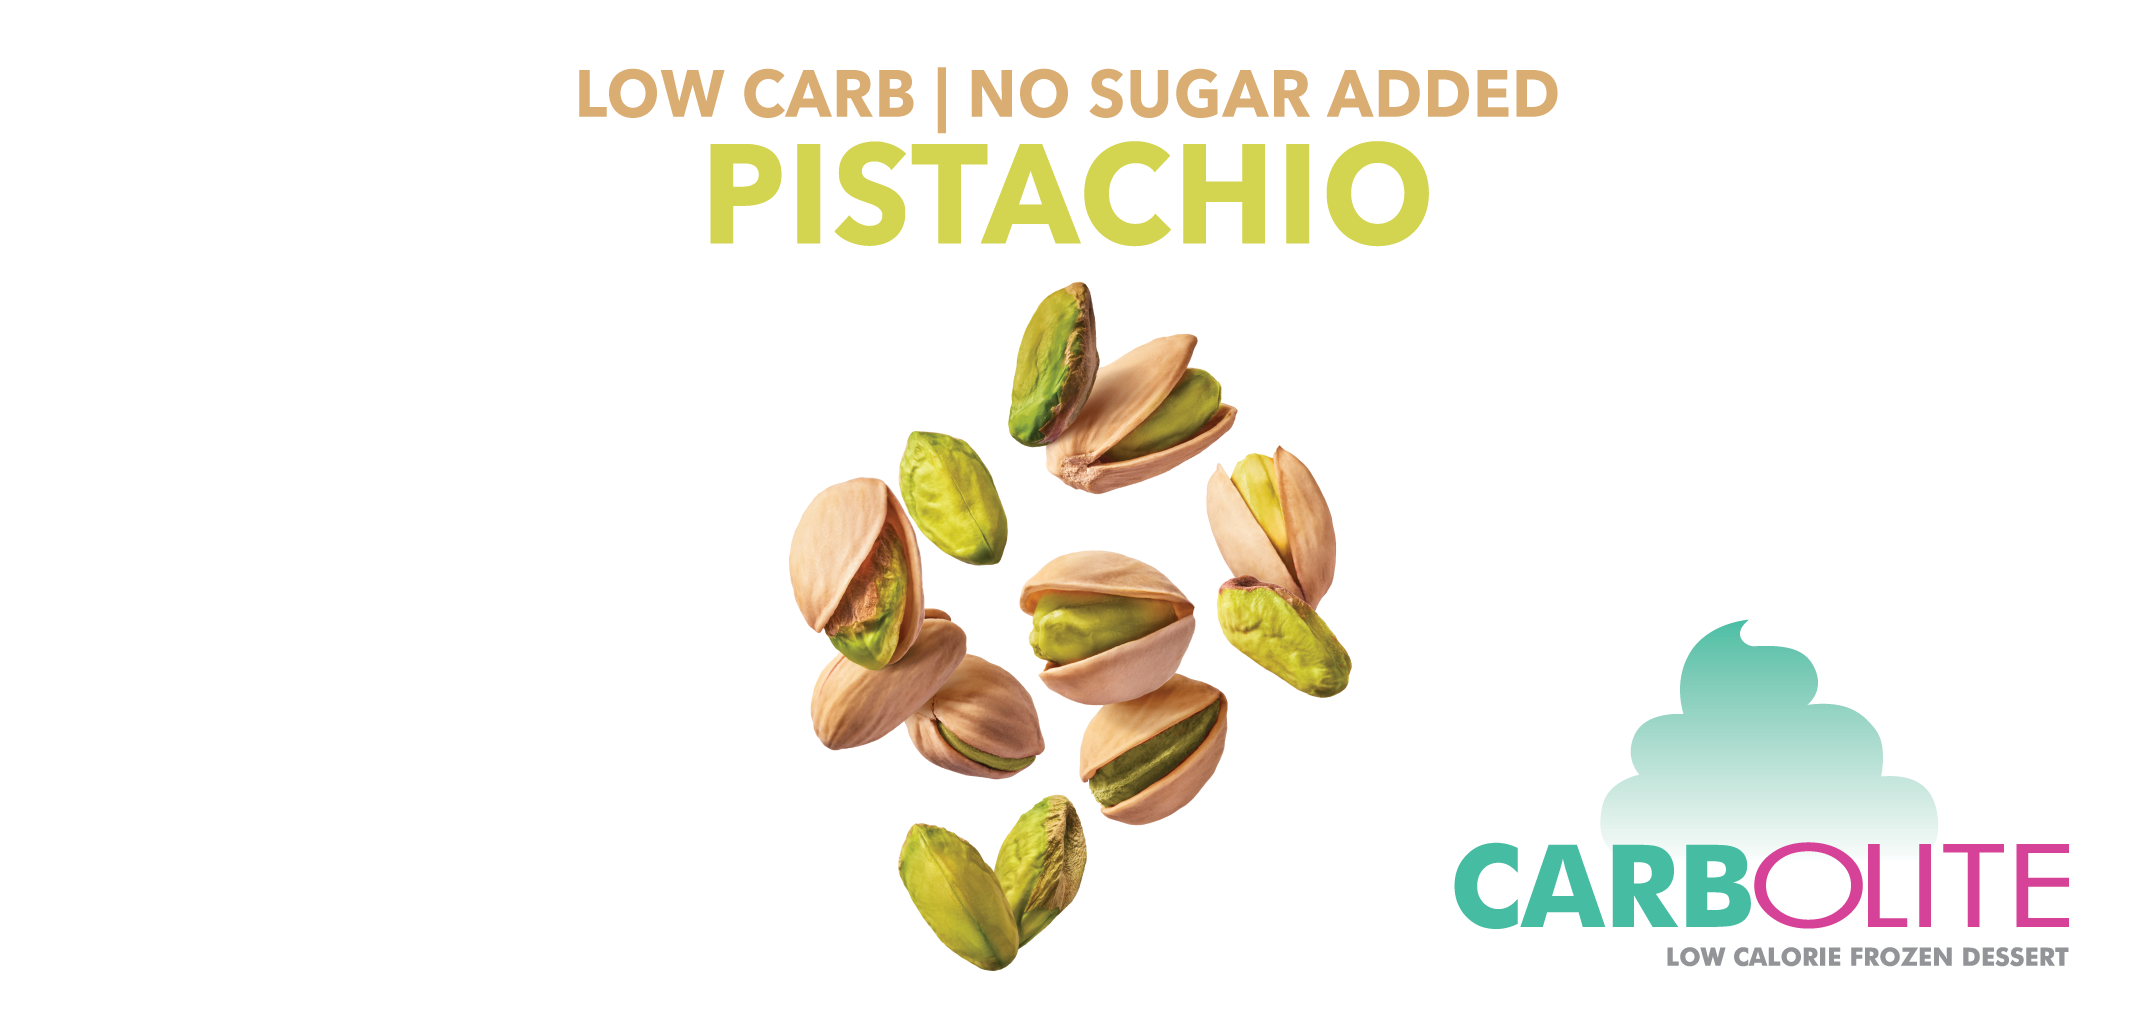 Carbolite Low Carb No Sugar Added Pistachio label image